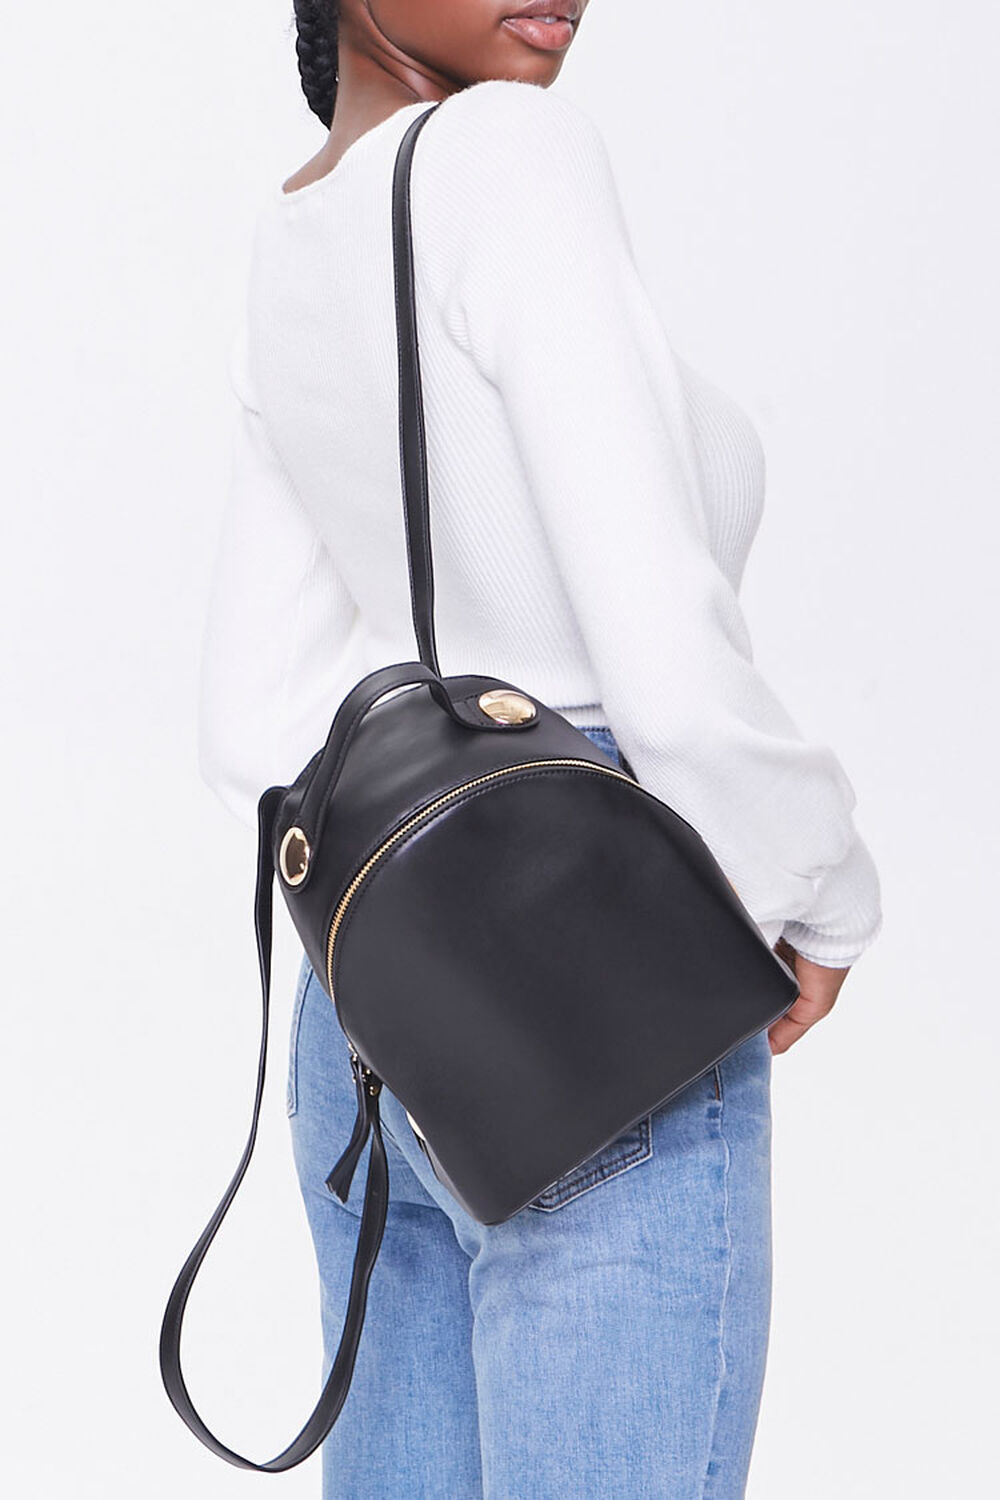 BLACK Faux Leather Mini Backpack, image 1